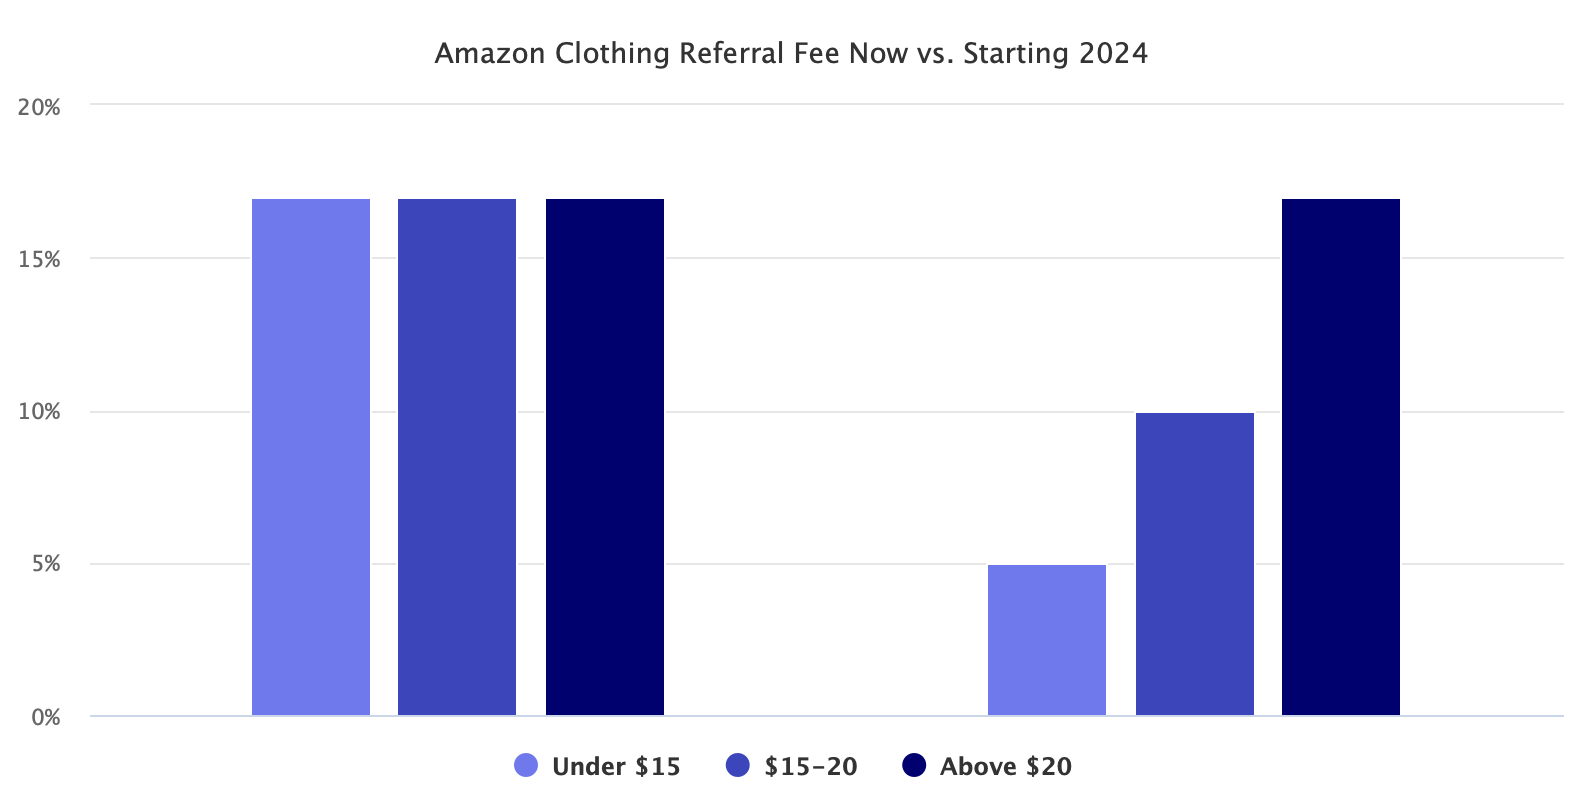 Amazon Clothing Referral Fee Now vs. Starting 2024